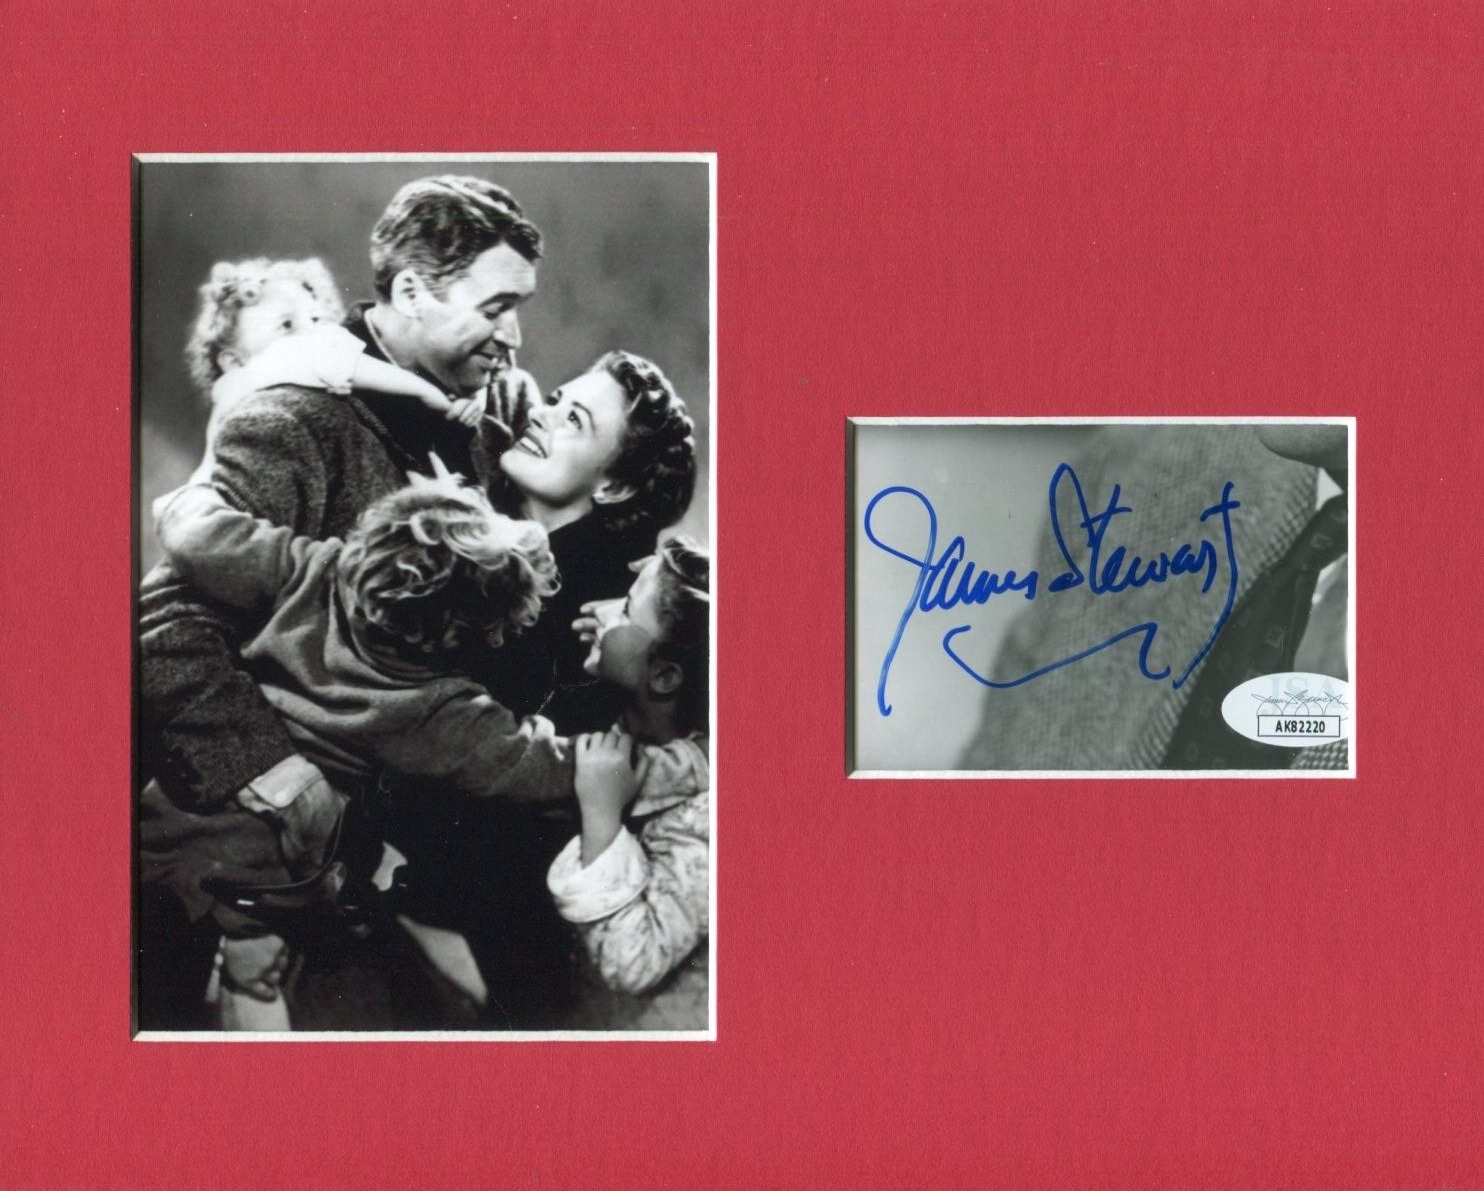 James Jimmy Stewart It's A Wonderful Life Signed Autograph Photo Display JSA